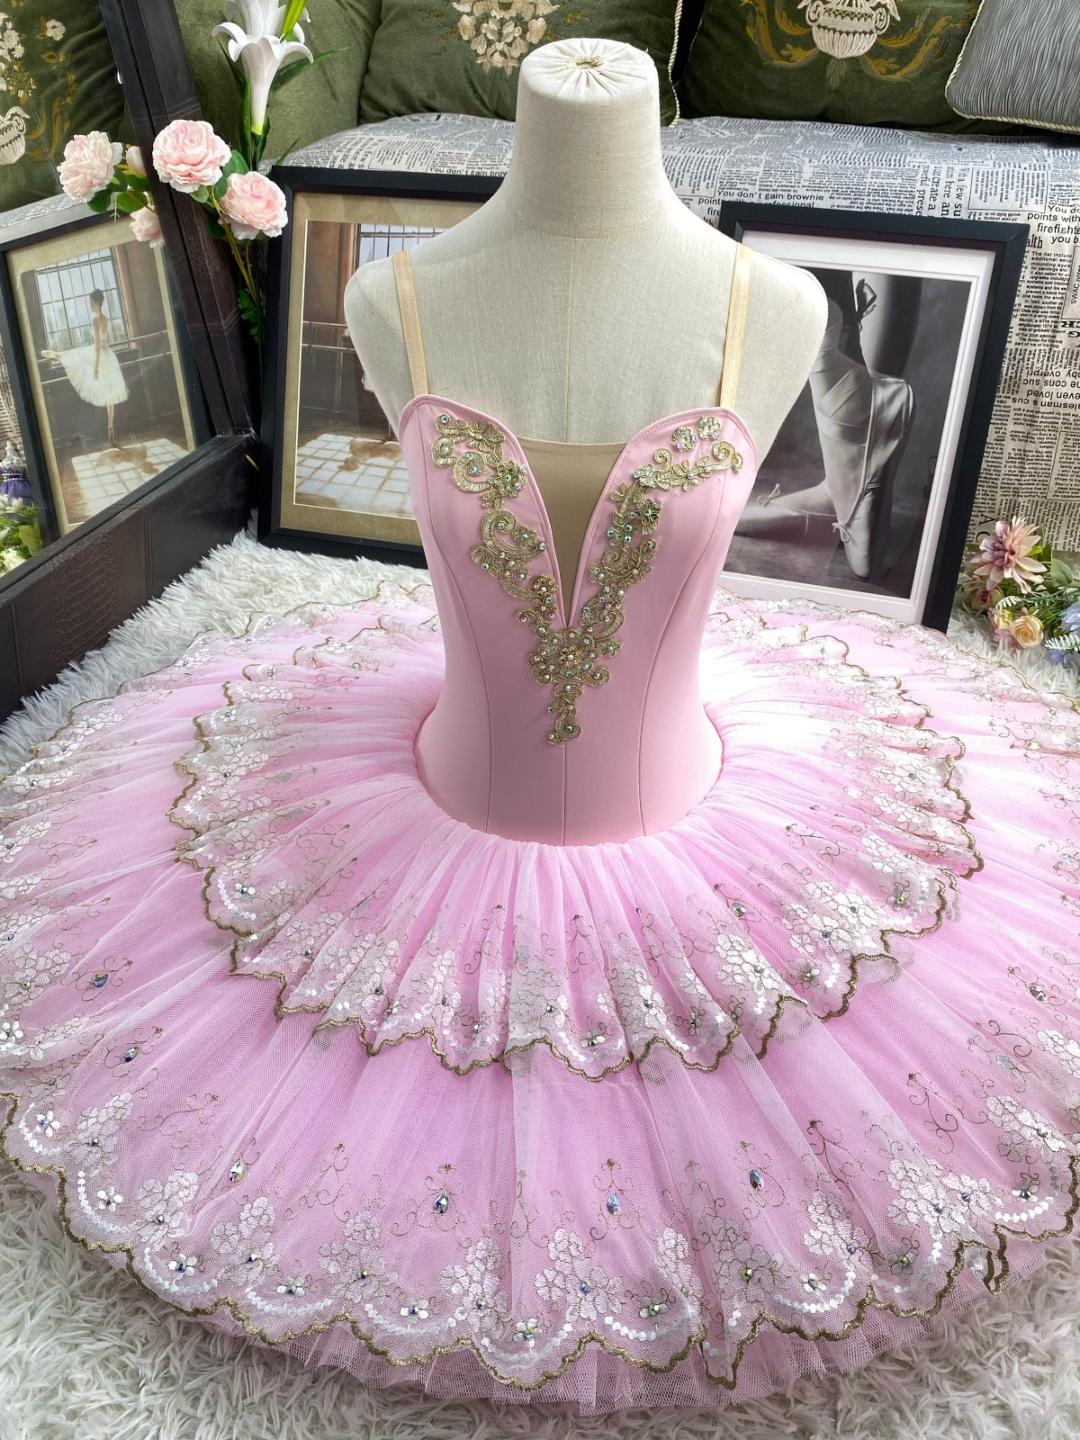 Princess of Sugar - Dancewear by Patricia